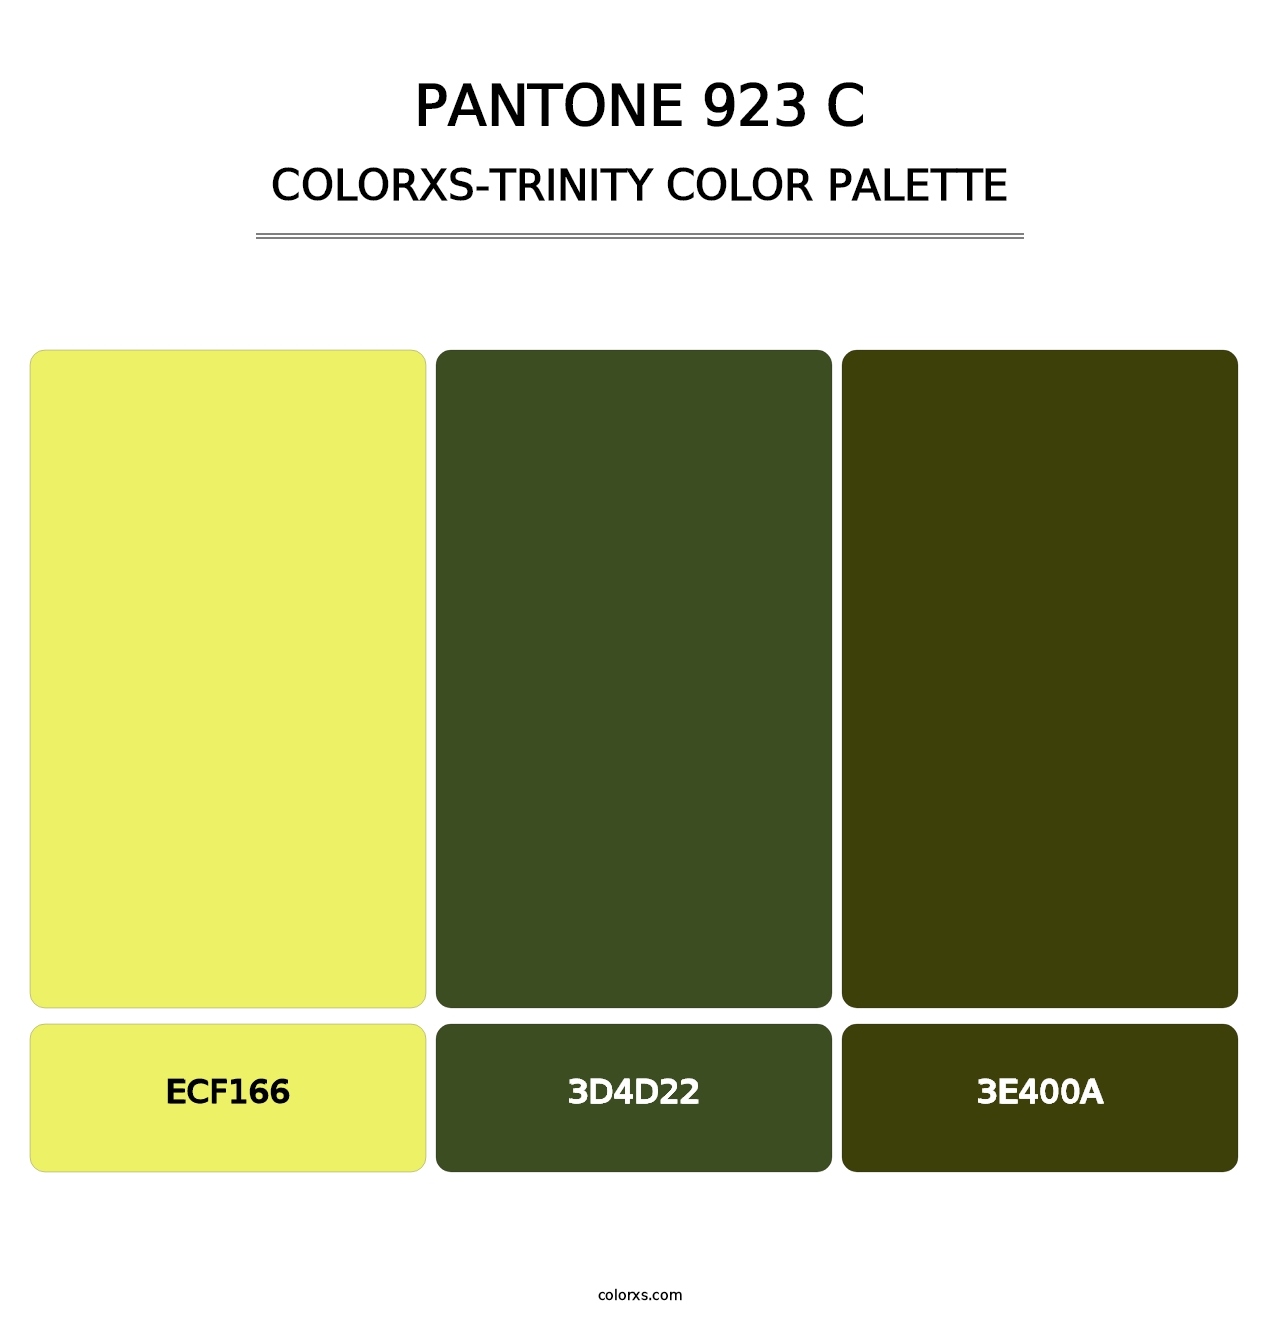 PANTONE 923 C - Colorxs Trinity Palette